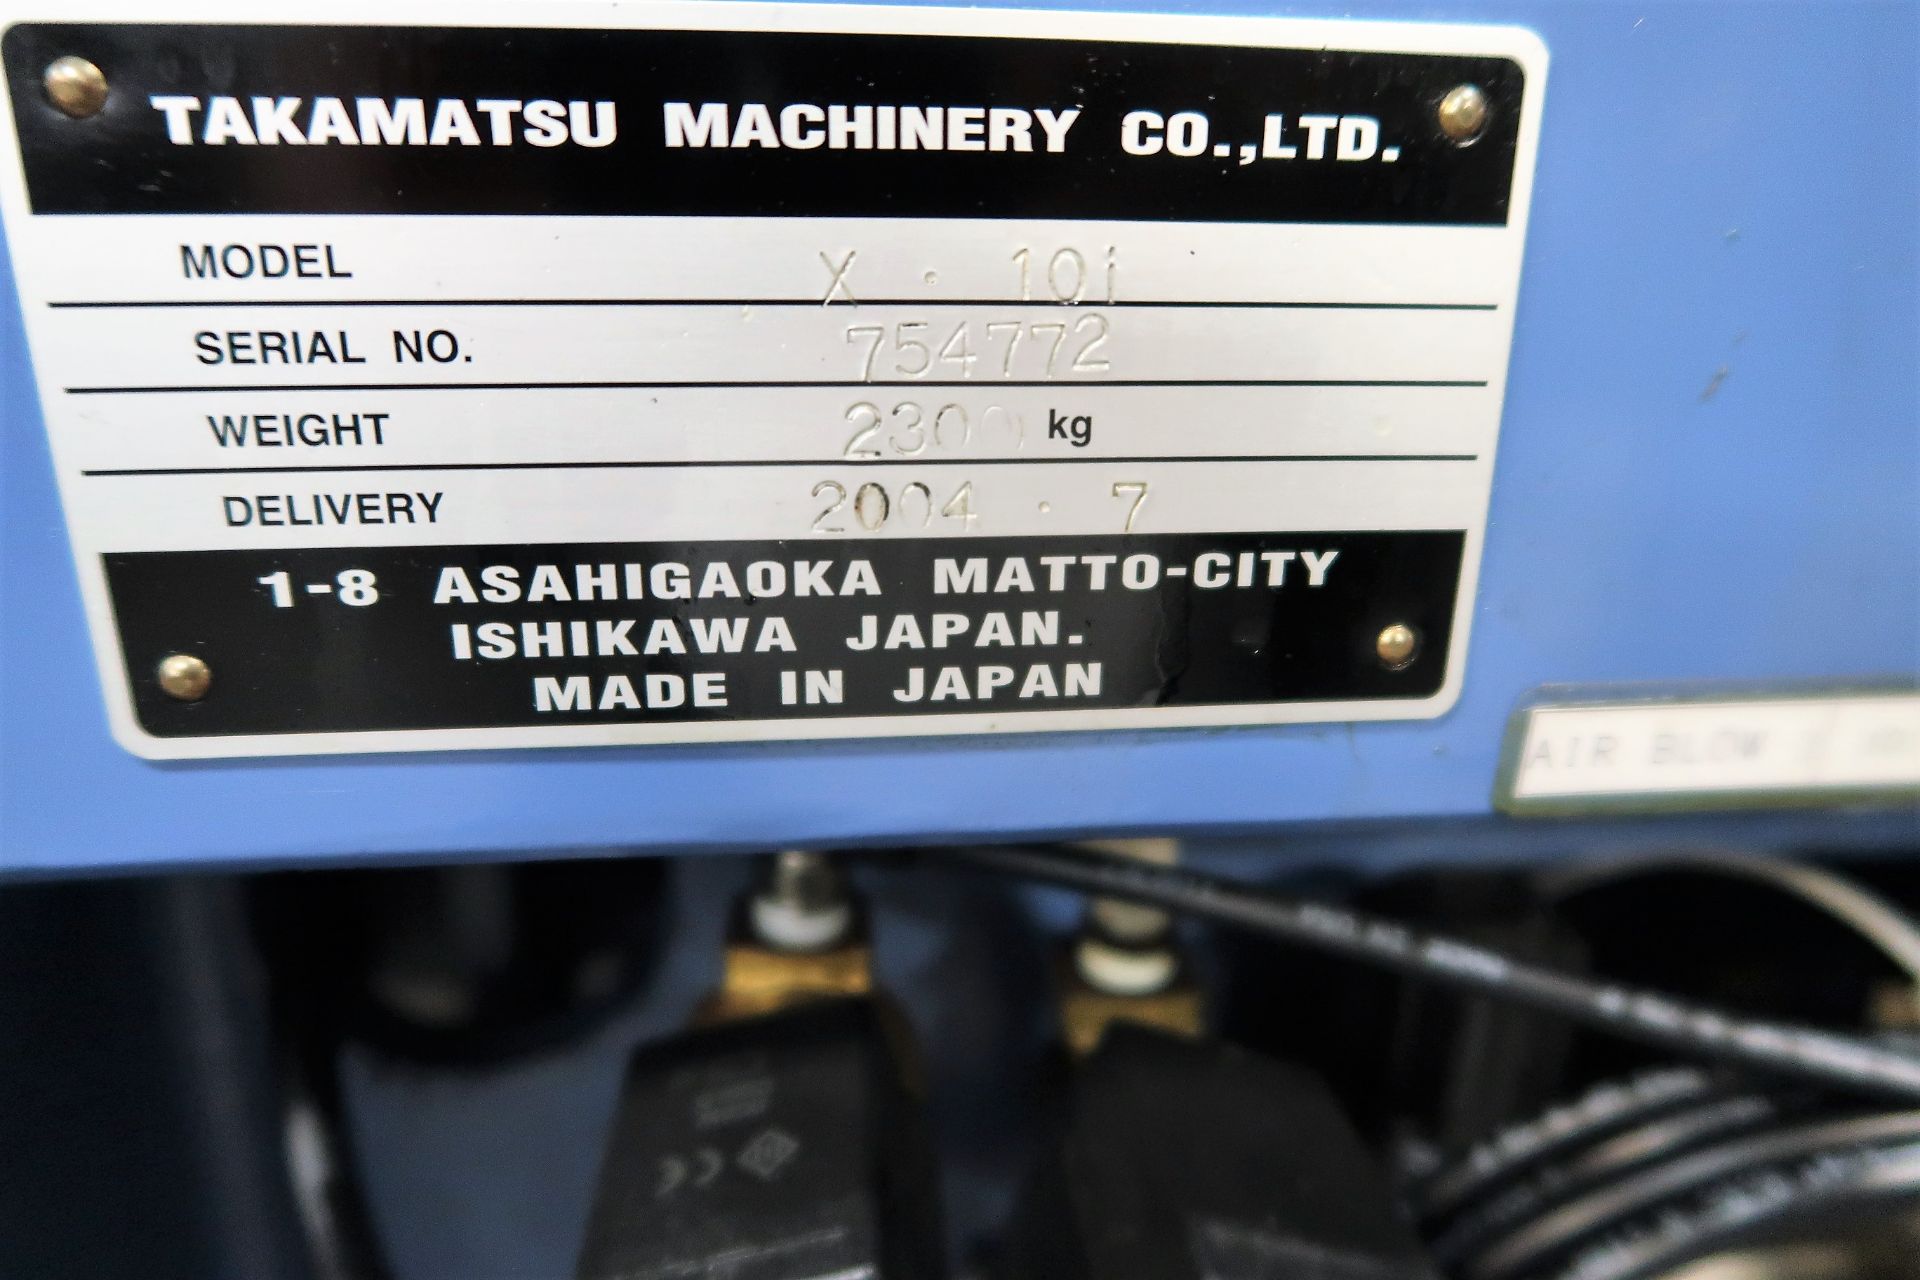 Takamaz X-10i CNC Turning Center with Auto Load/unload Robot, - Image 11 of 12